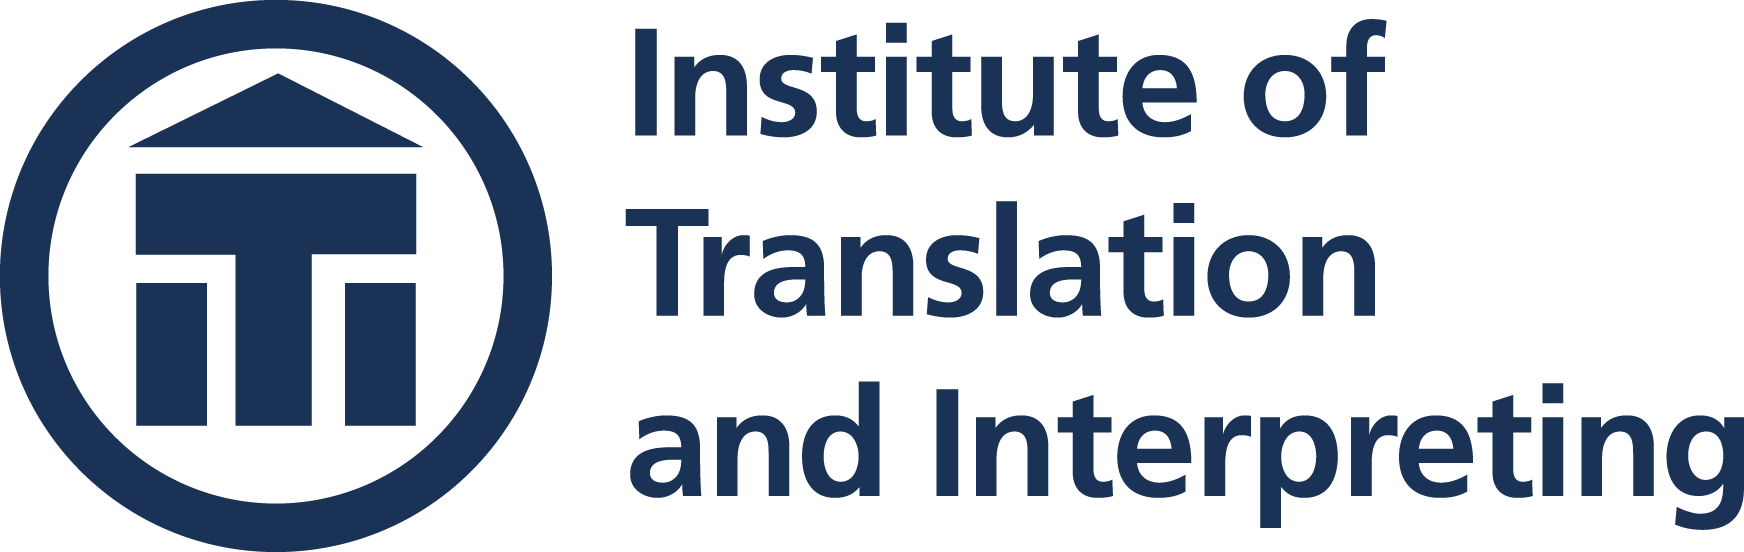 Institute of Translation and Interpreting (ITI)